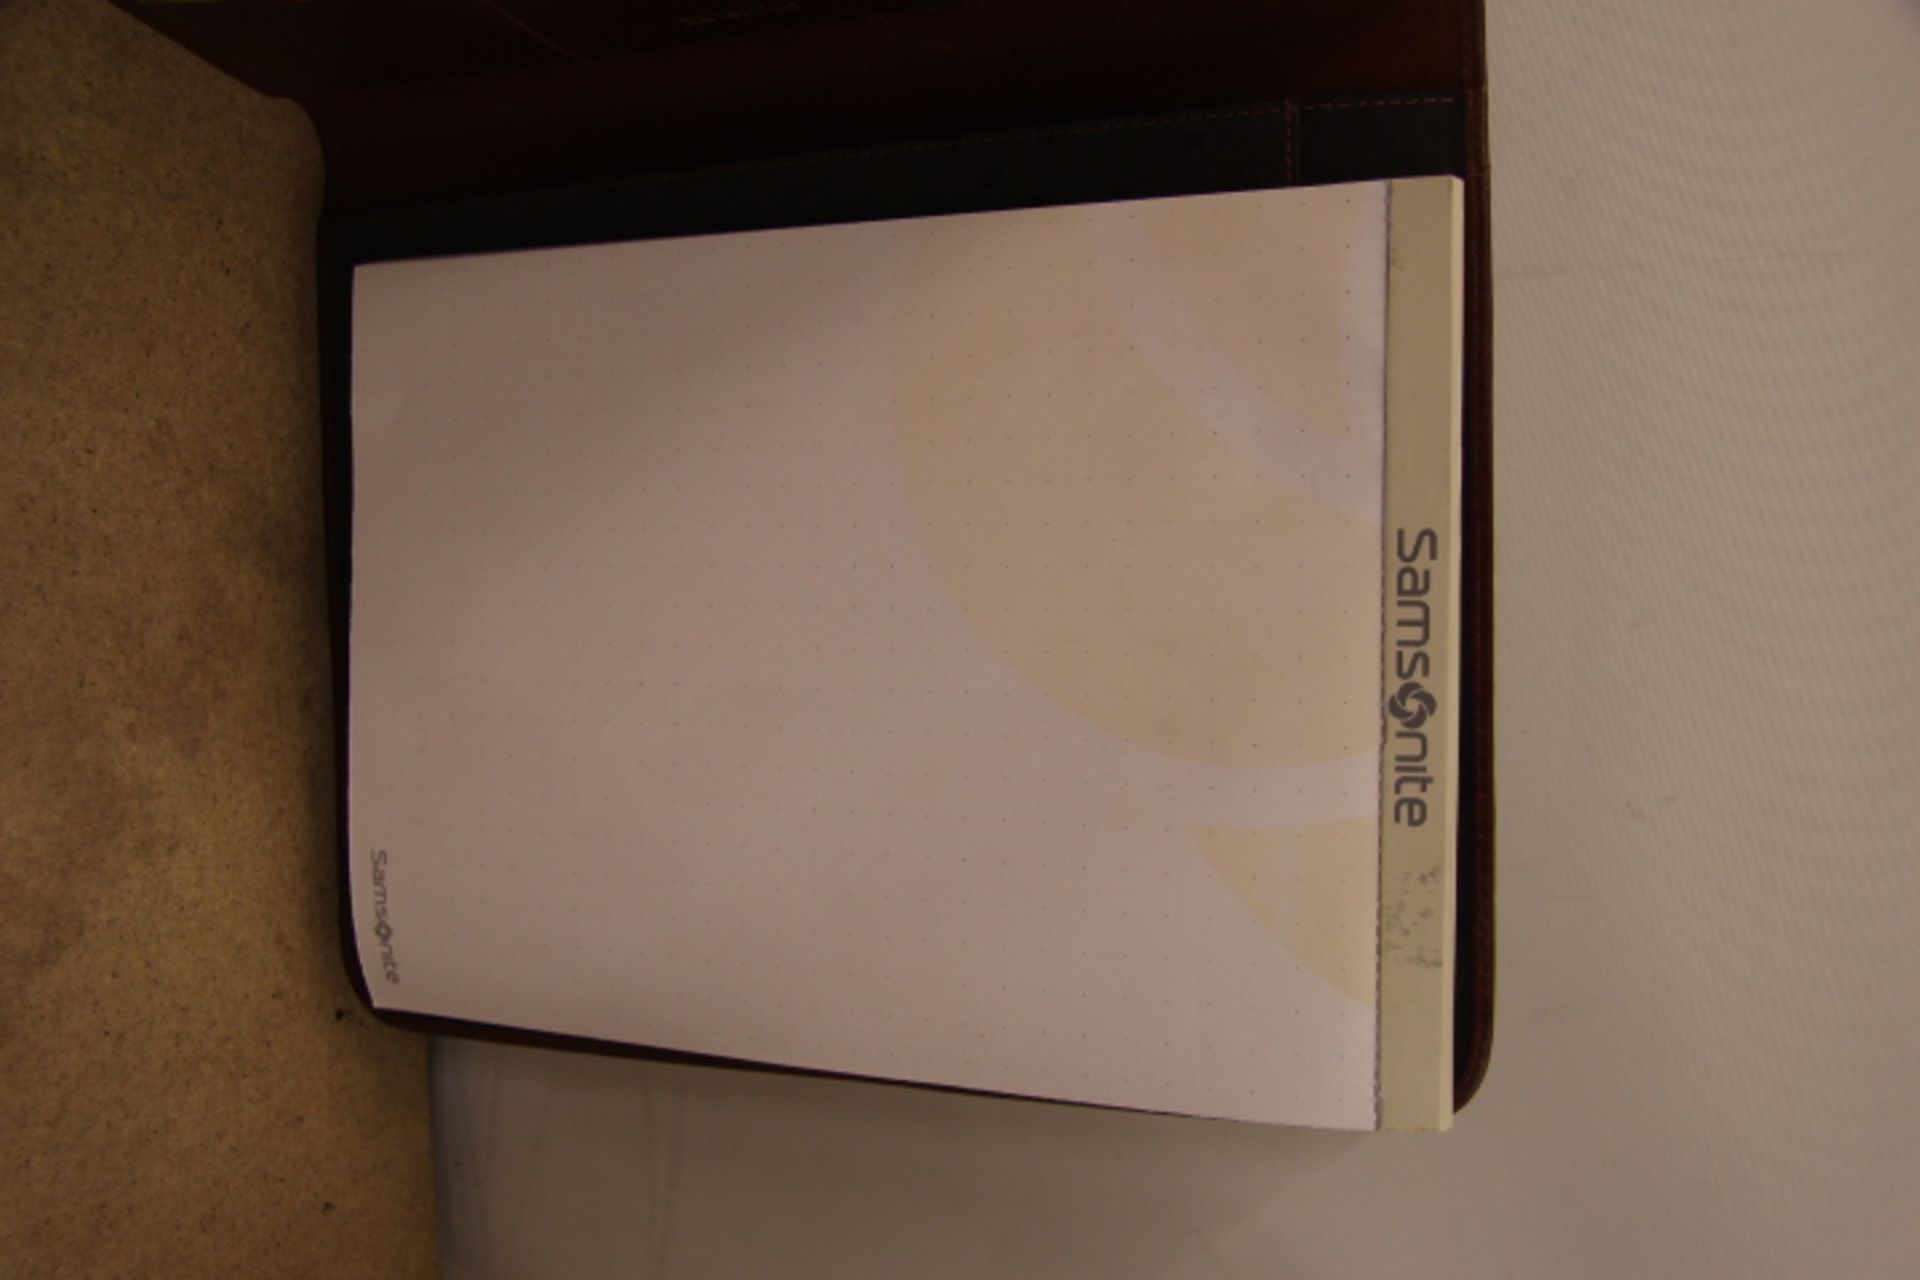 V Brand New Samsonite Gognac Leather Executive Folder With Writing Pad Card Holders Zipped Pocket - Image 2 of 3